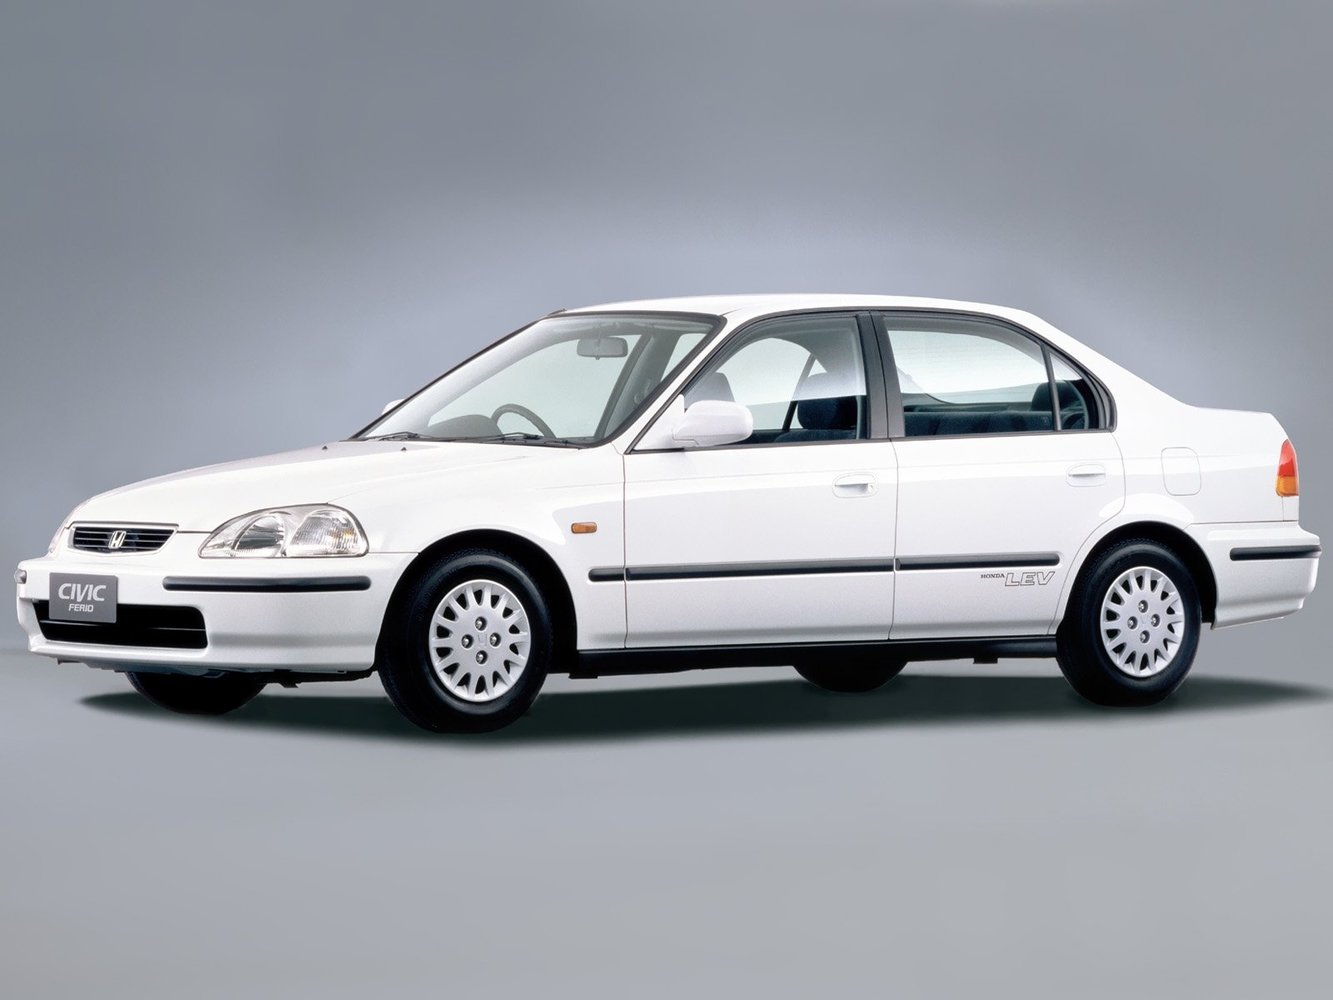 седан Honda Civic Ferio 1995 - 2000г выпуска модификация 1.3 AT (91 л.с.)